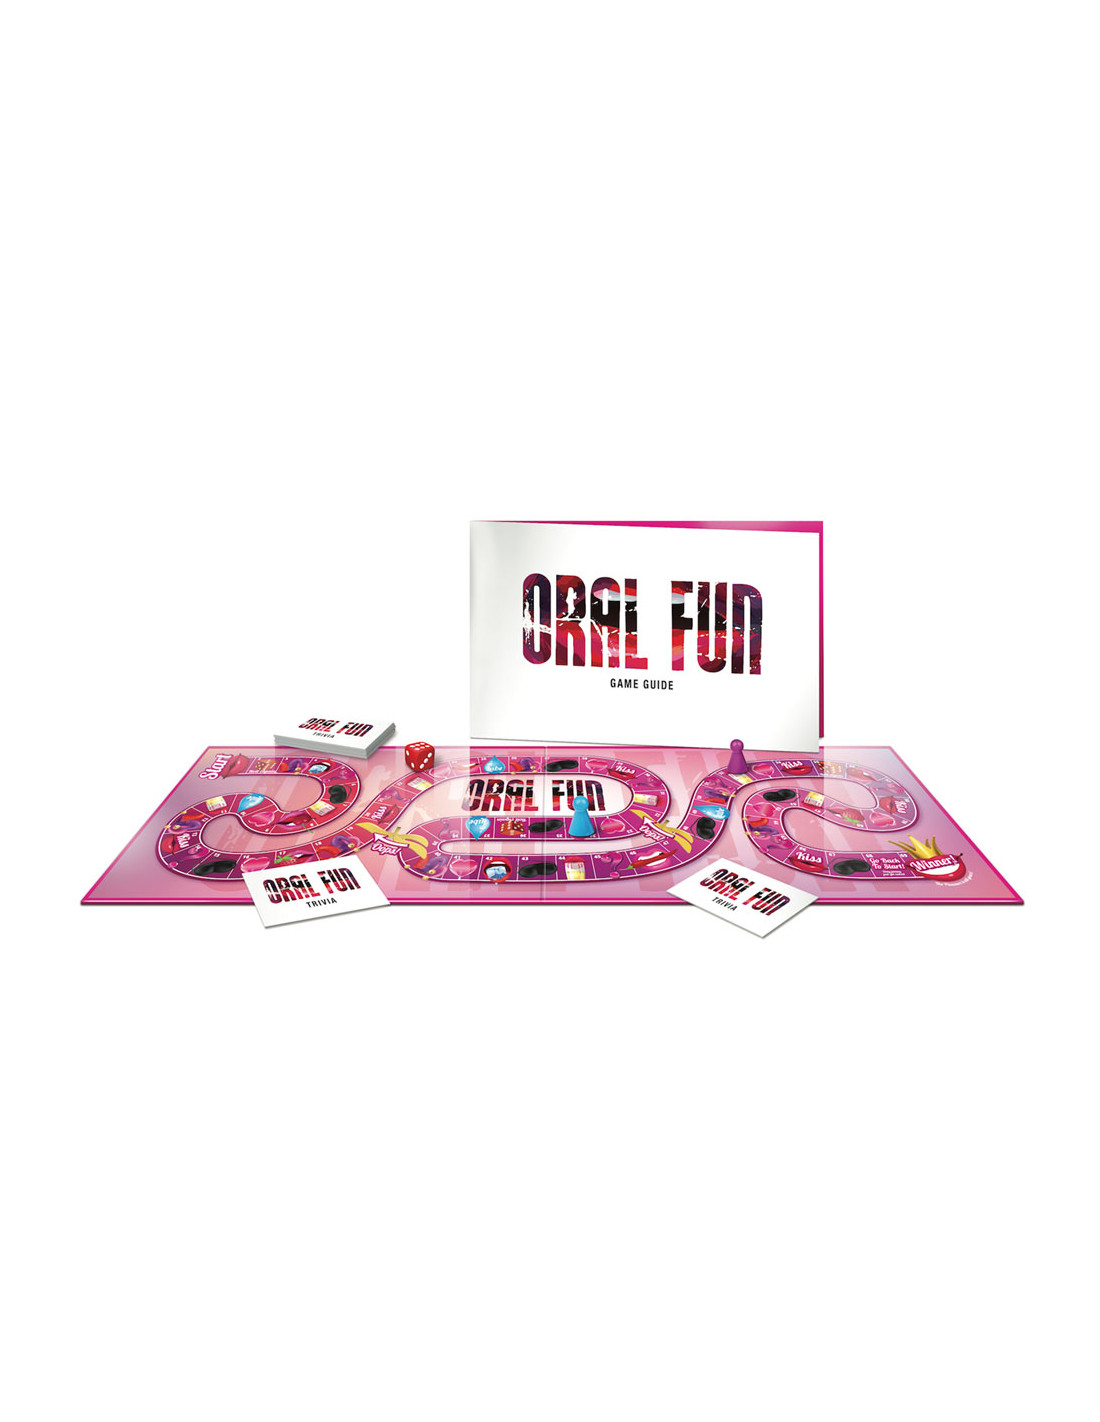 Creative Conceptions Oral fun : jeu coquin pour couple 